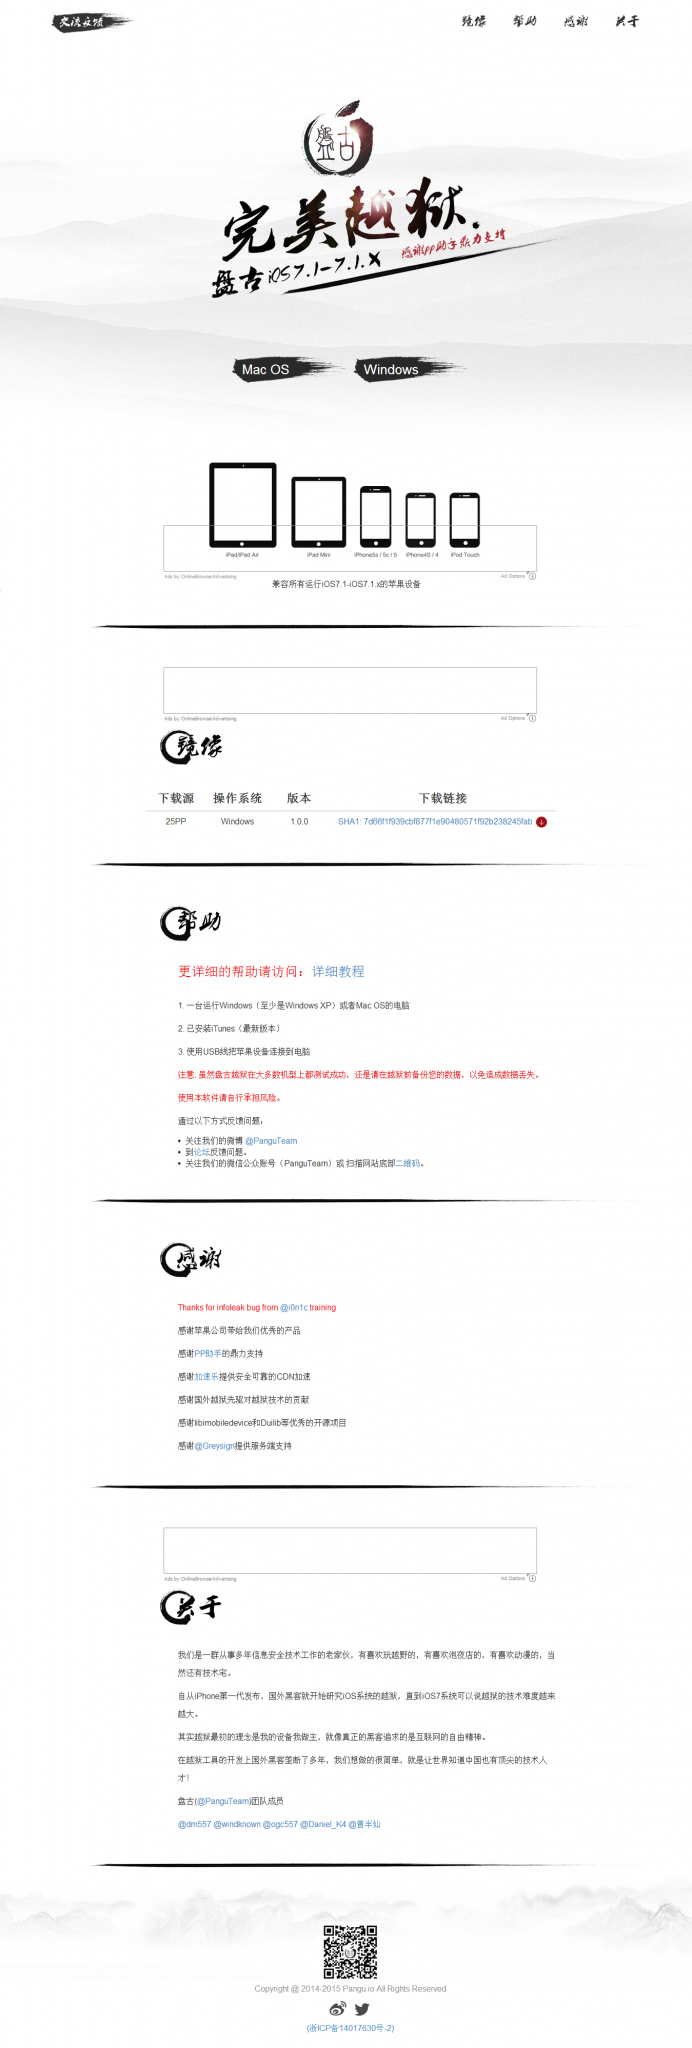 Pangu越狱工具 Pangu.io  - iOS 7.1.1 Jailbreak now available